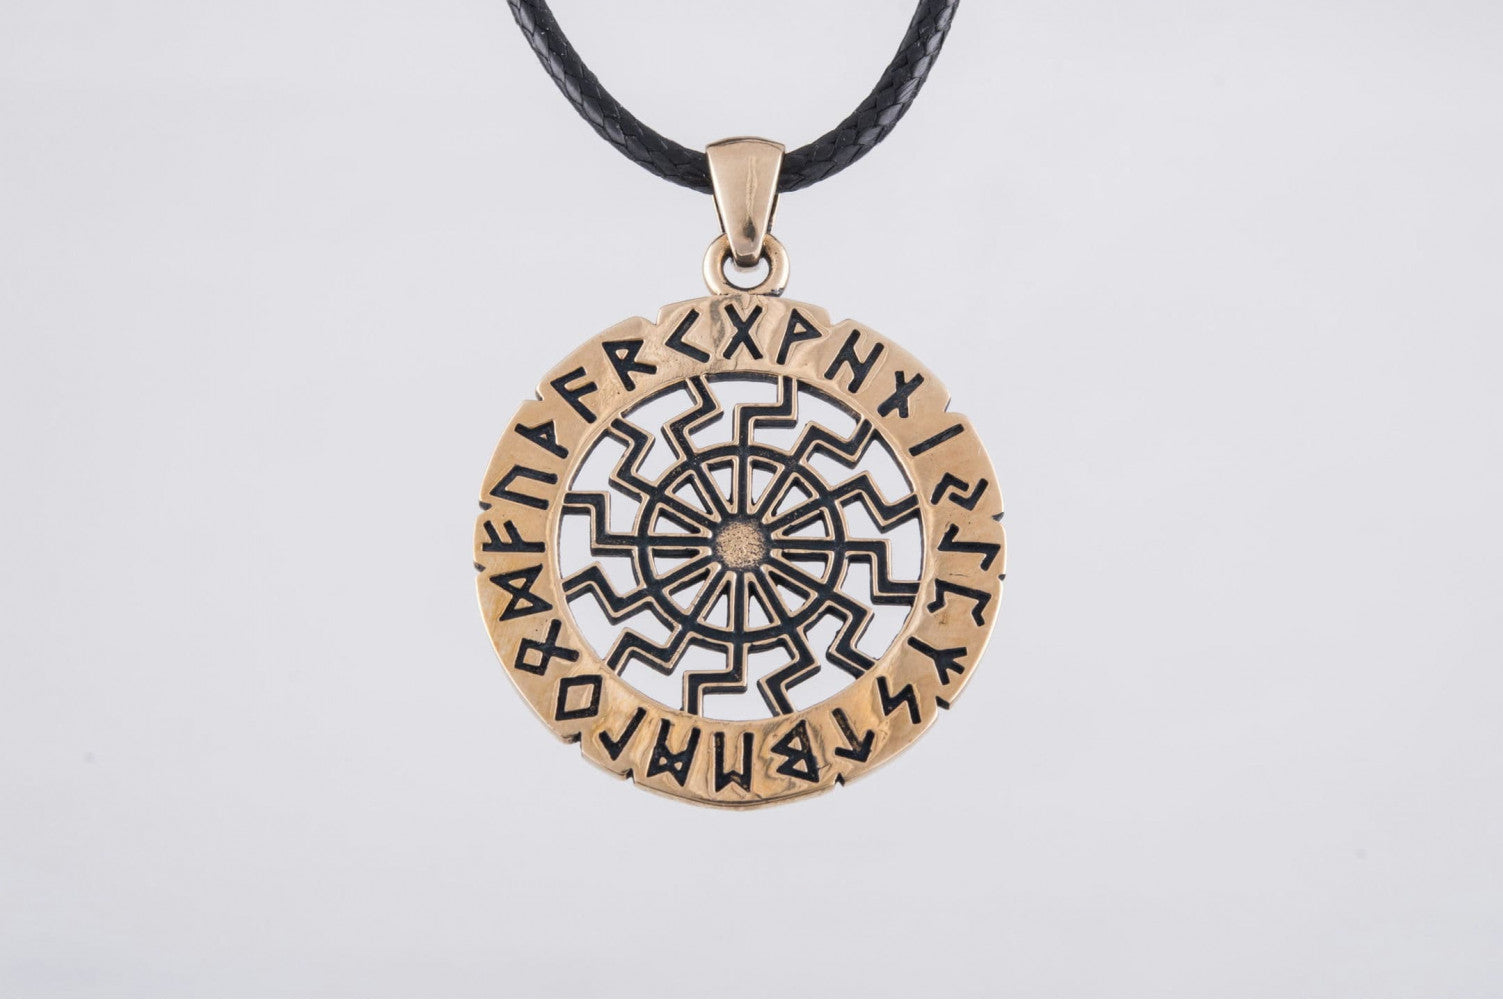 Black Sun Symbol with Elder Futhark Runes Bronze Pendant - vikingworkshop